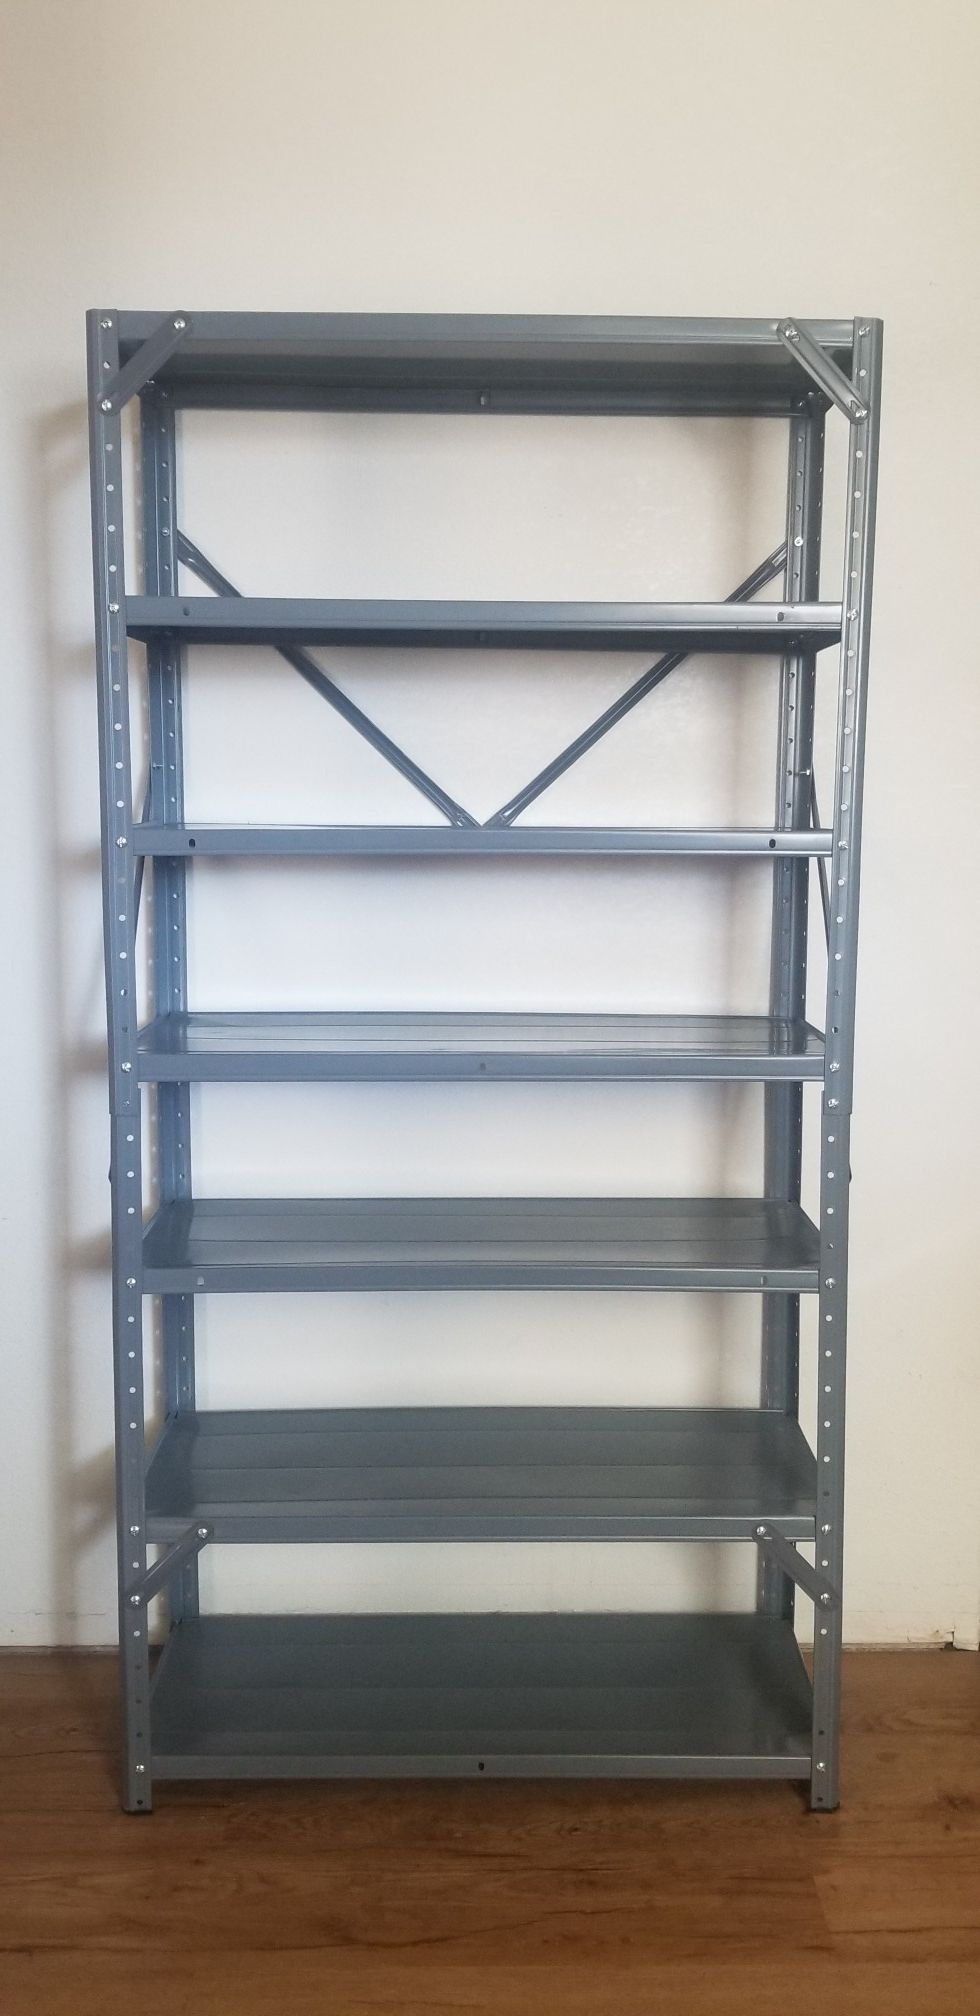 Shelving Storage Unit, 7-Shelves